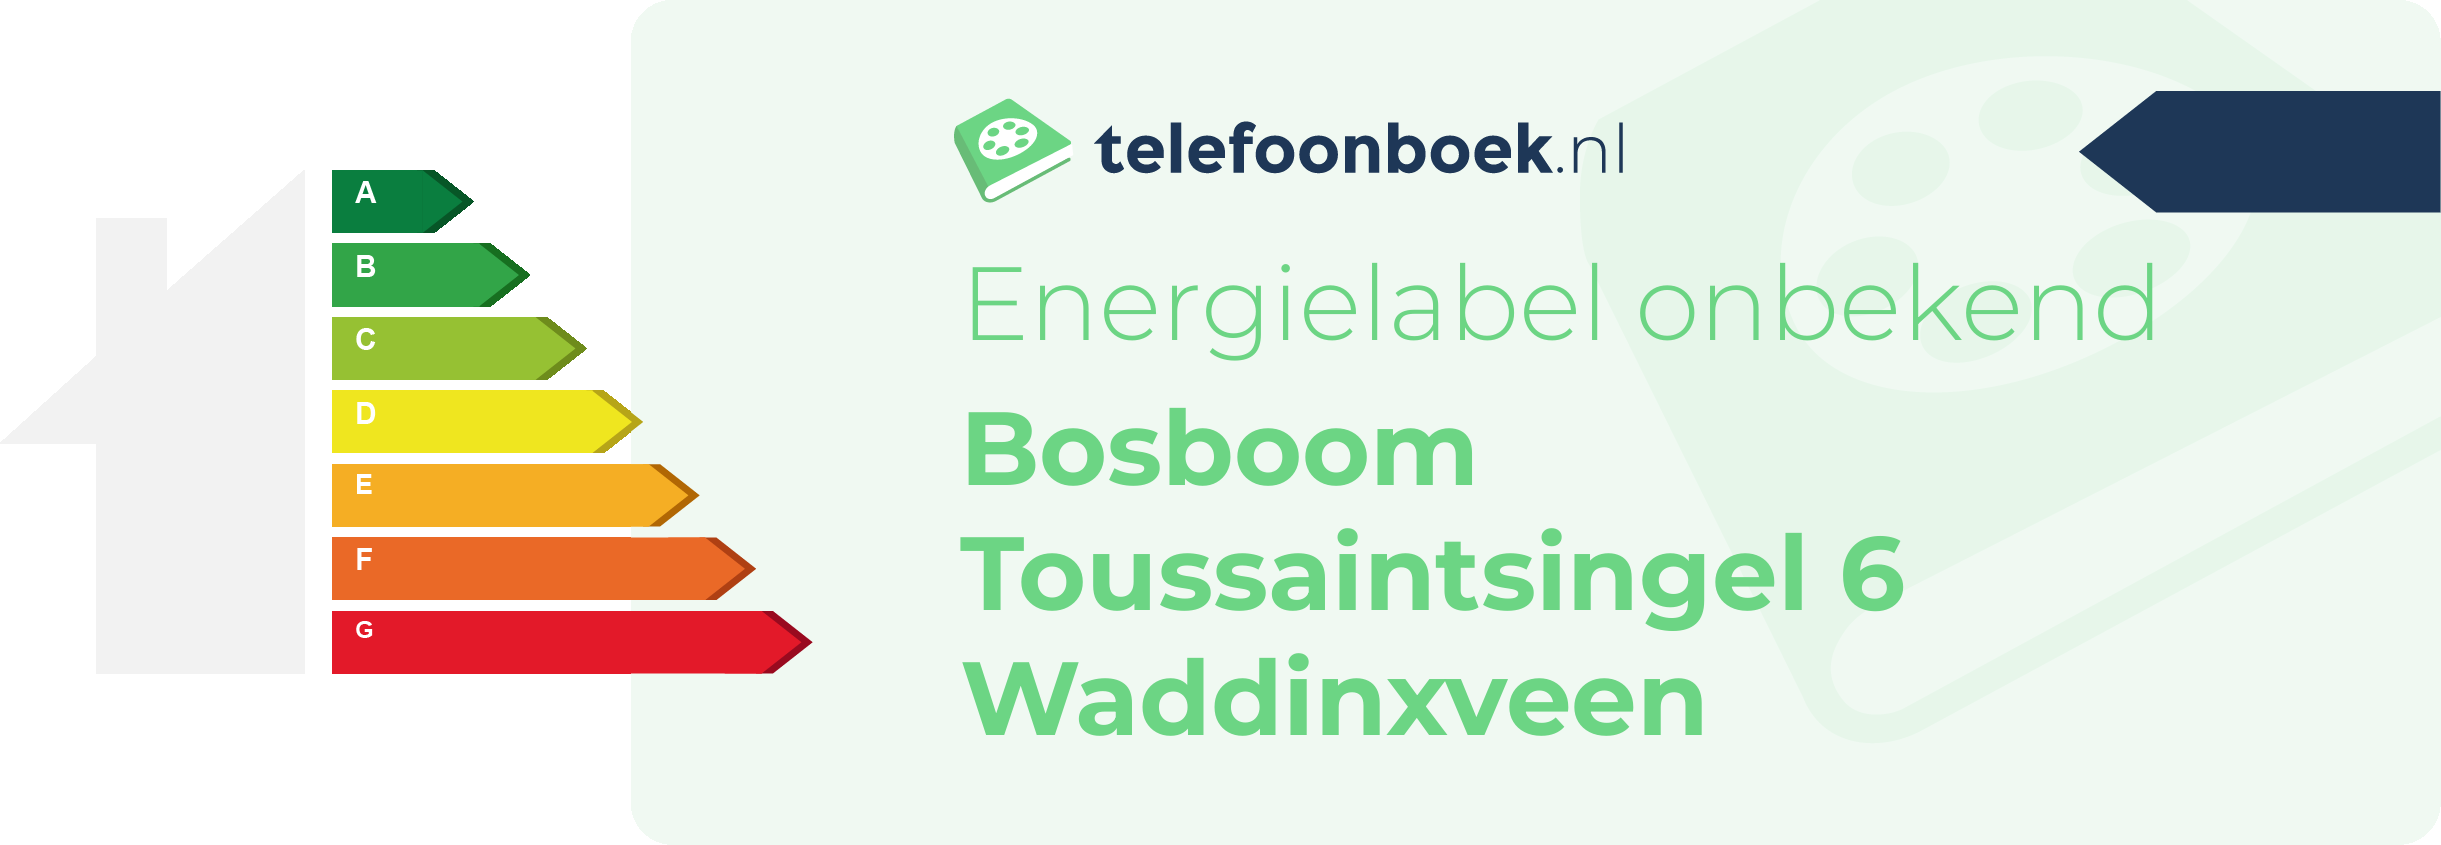 Energielabel Bosboom Toussaintsingel 6 Waddinxveen